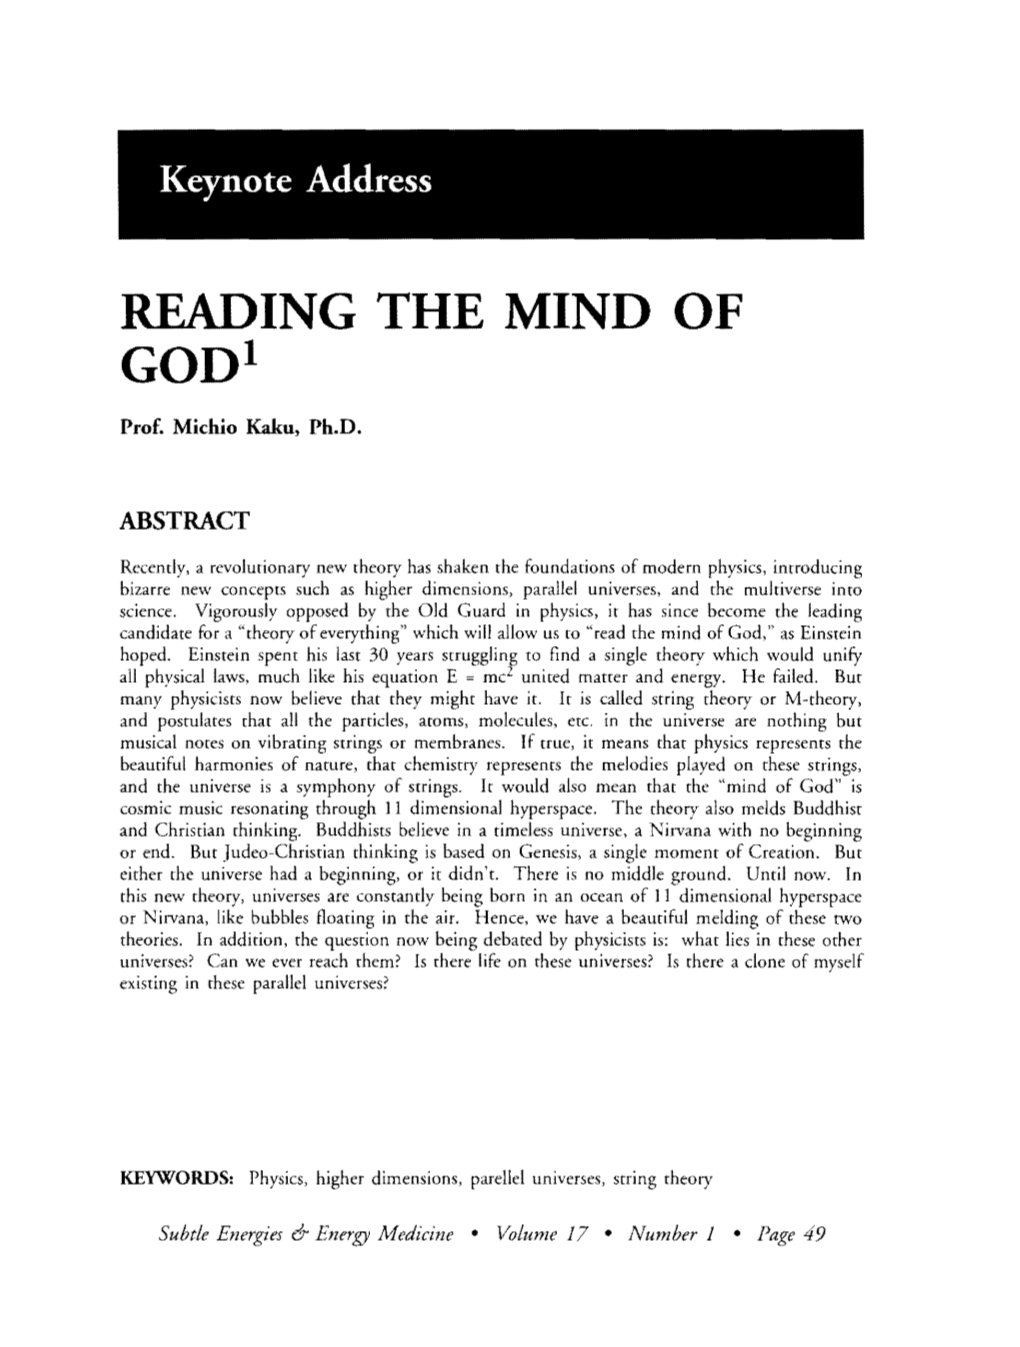 Reading the Mind of God!